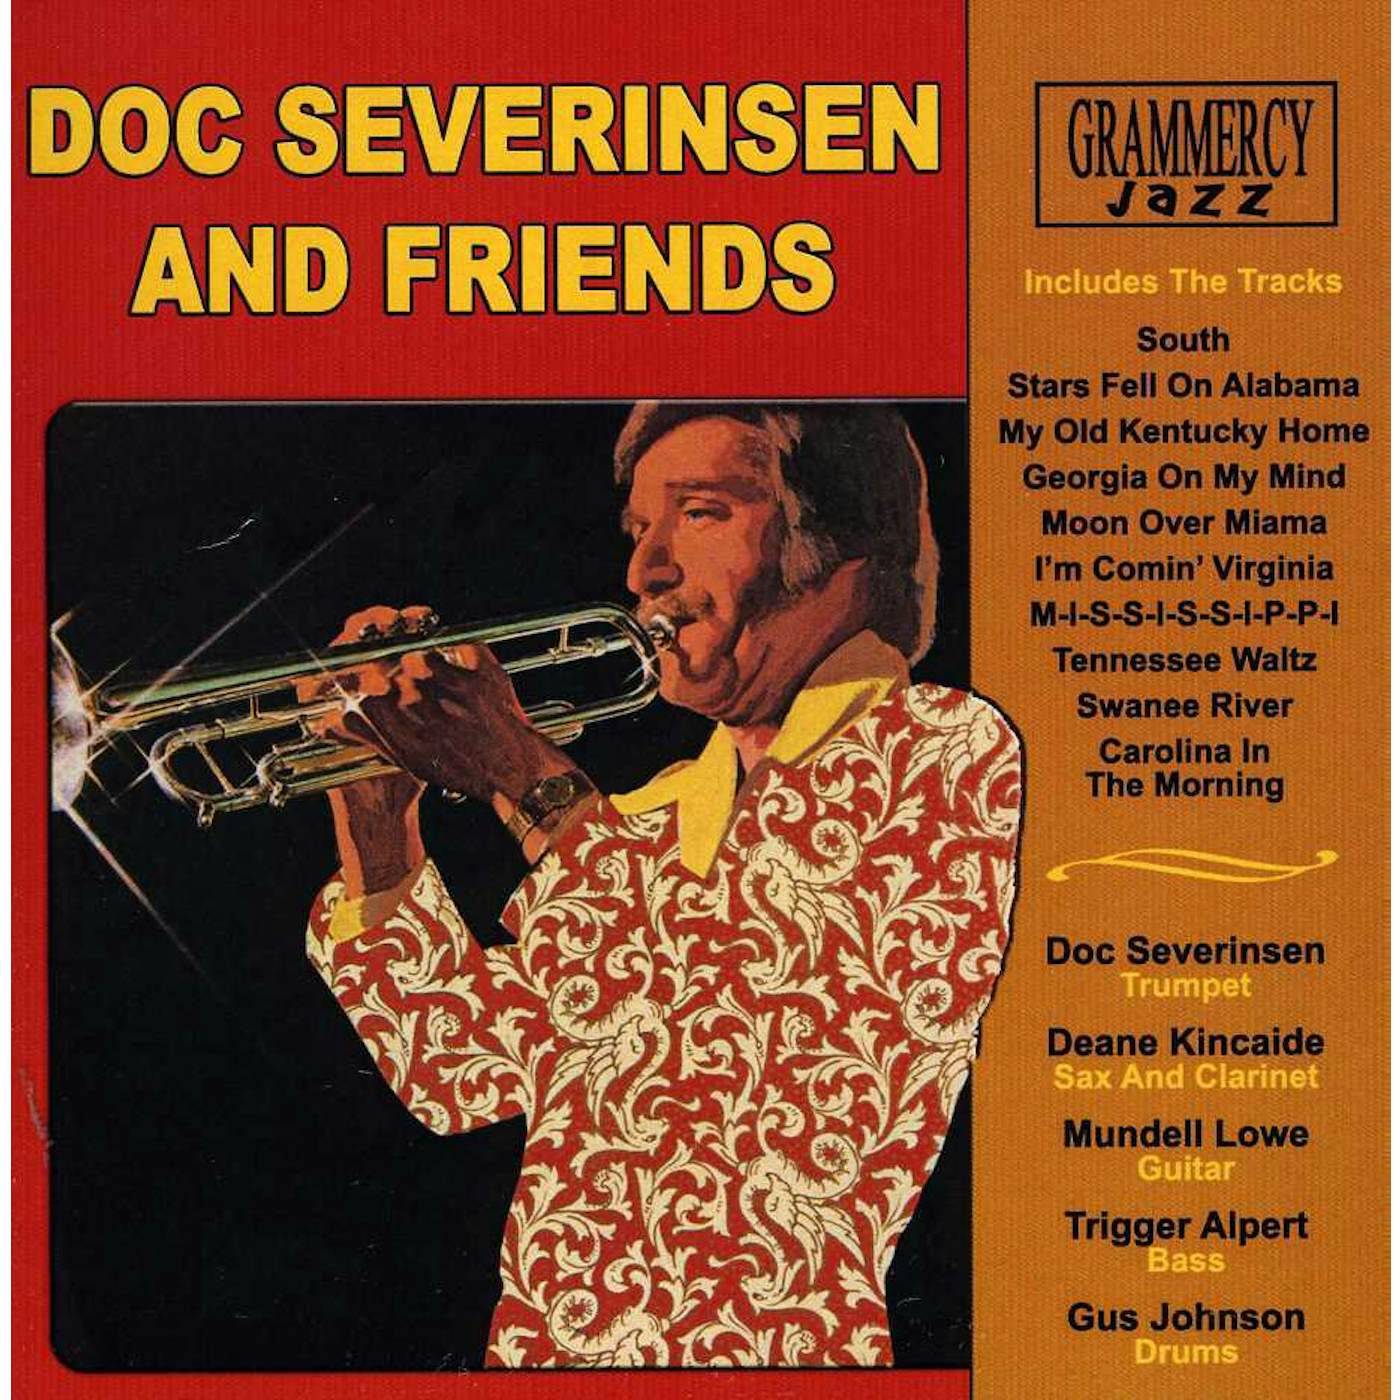 DOC SEVERINSEN & FRIENDS CD